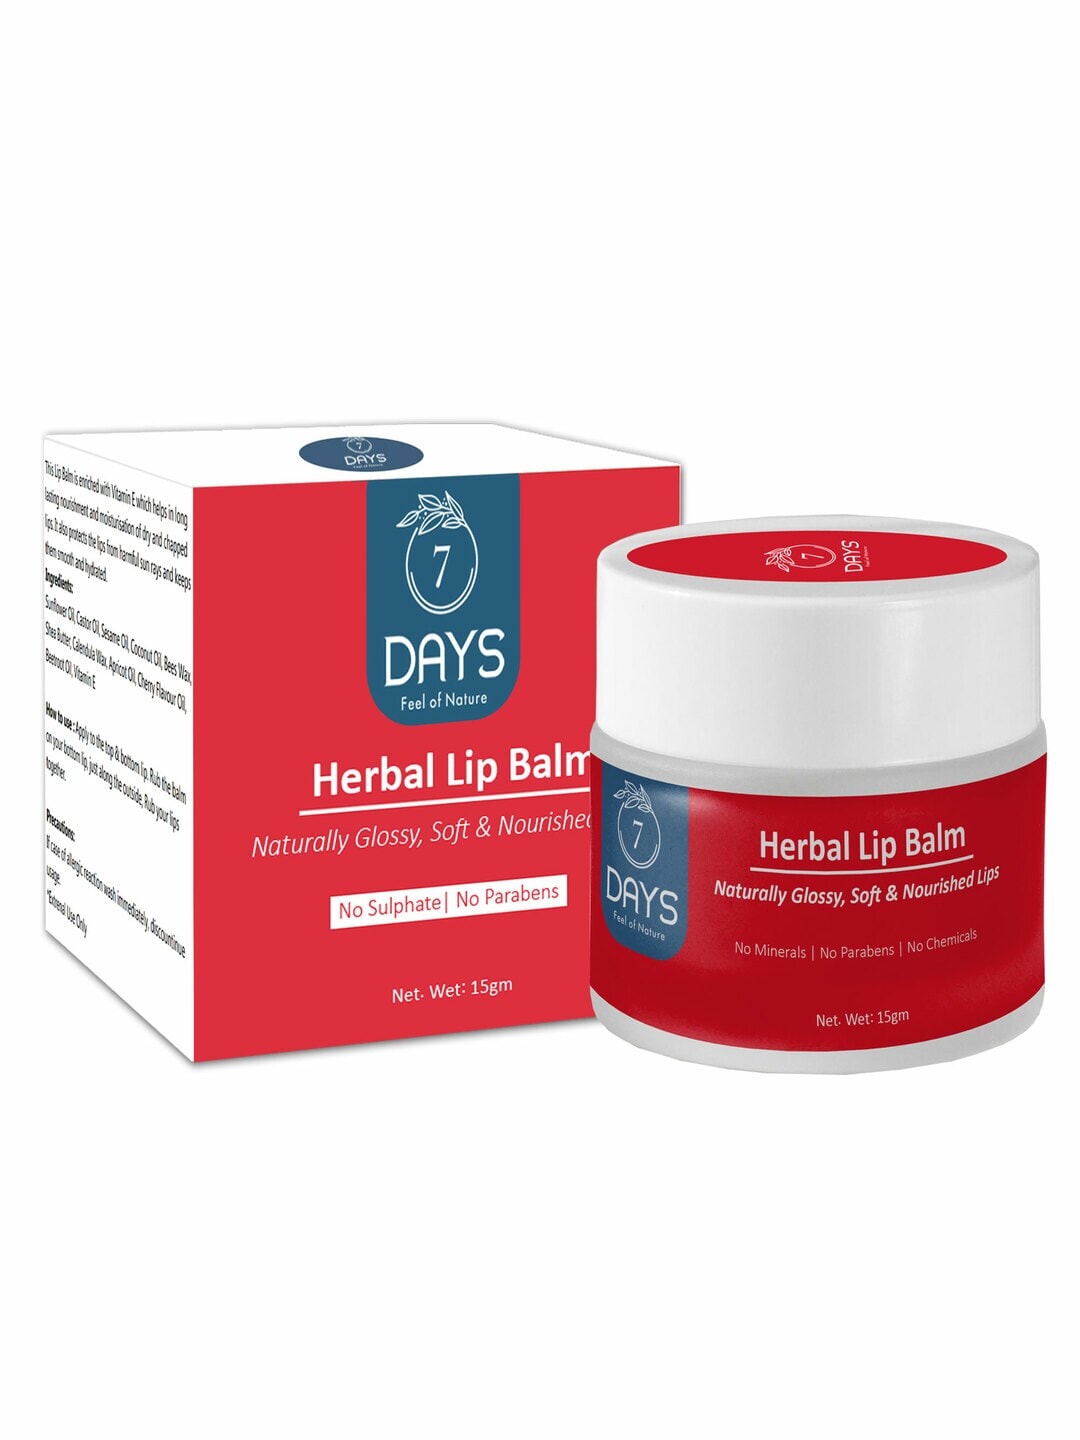 7 DAYS Herbal Lip Balm - 15g Price in India